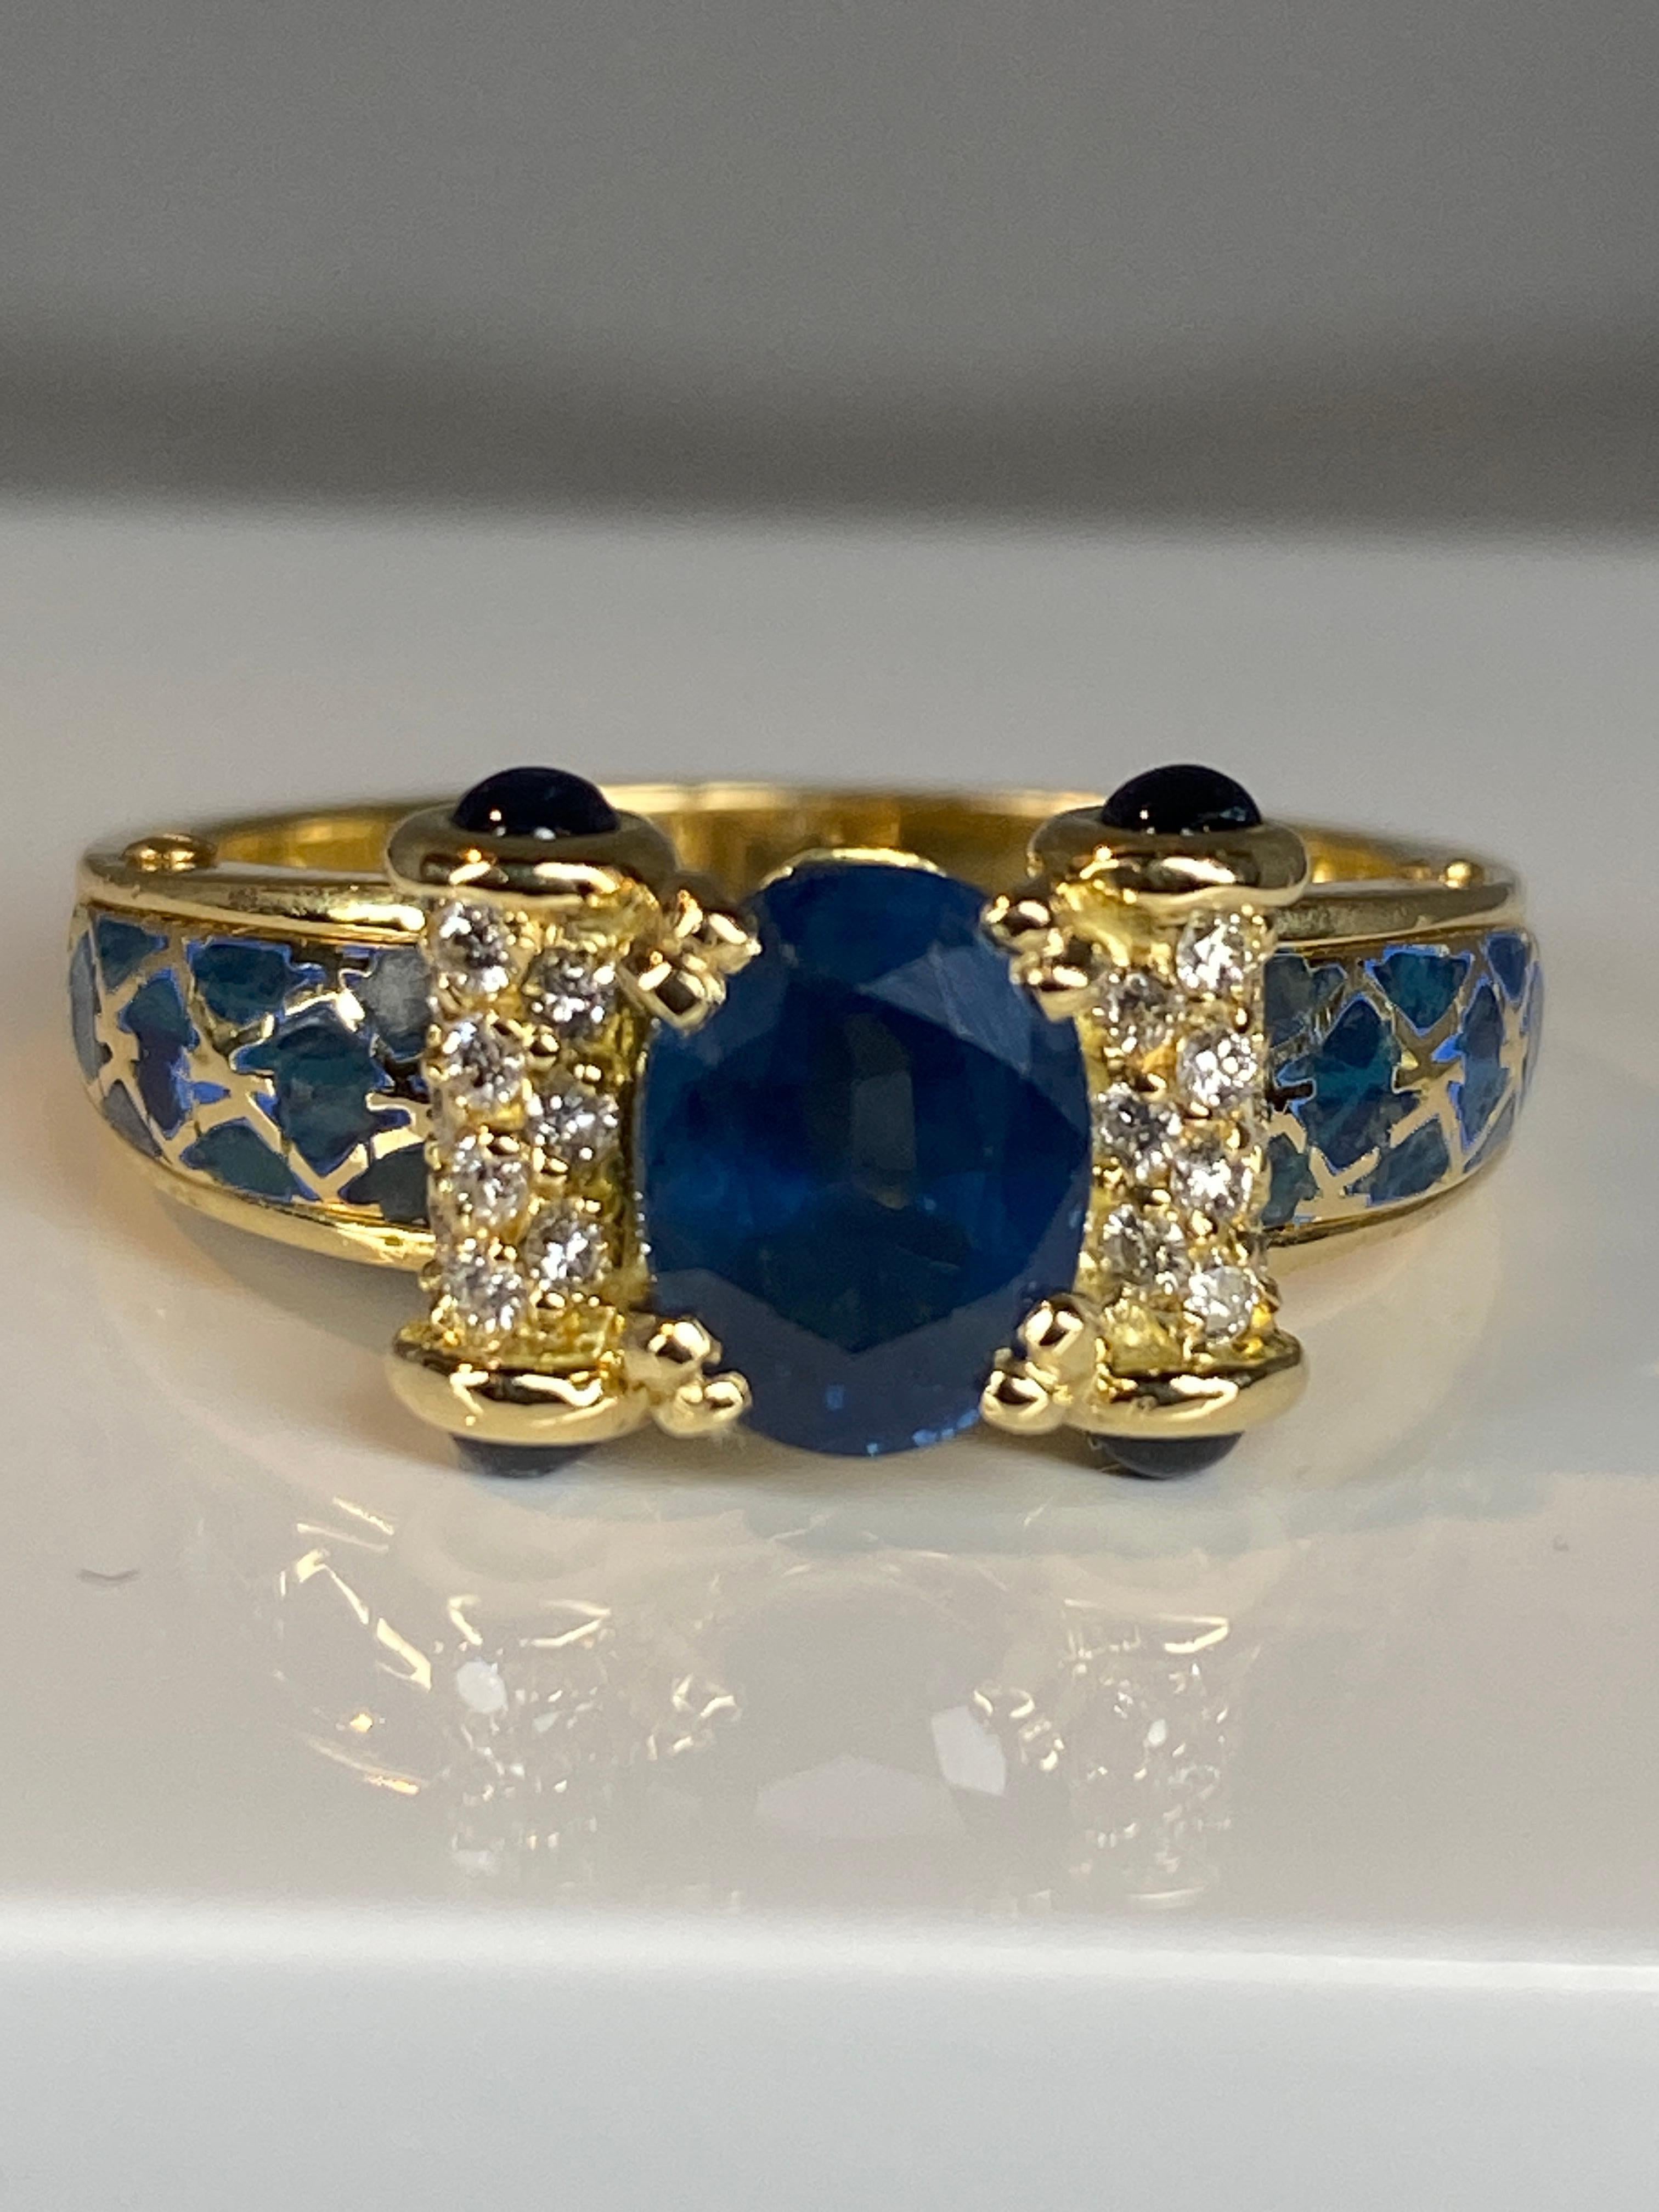 Korloff Ring in 18 Carat Gold: Sapphires, Diamonds, Blue Enamel For Sale 8